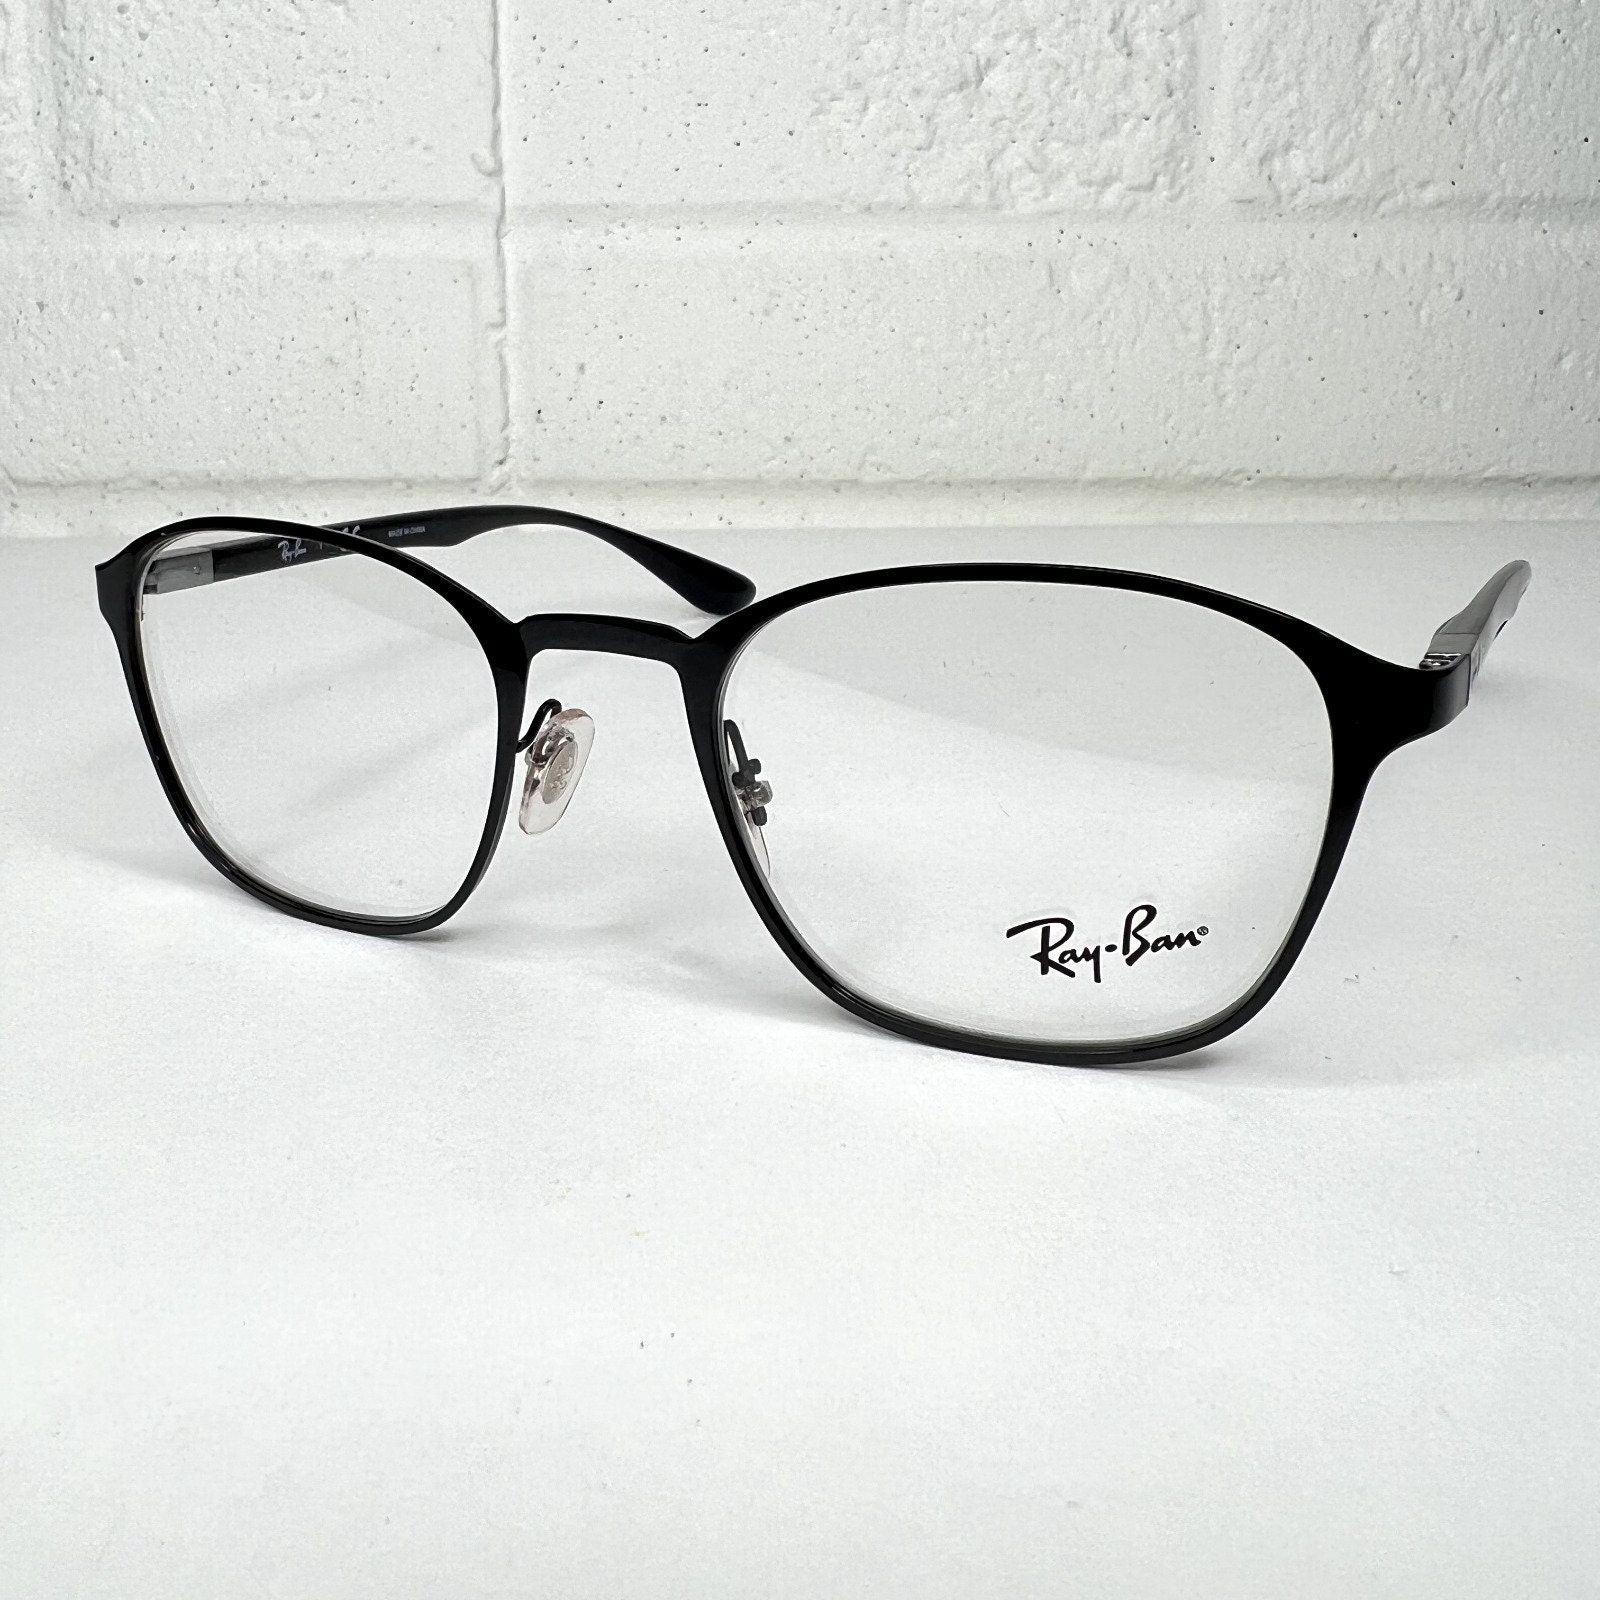 Ray-ban RB6357 2509 Eyeglasses Frames Black Square Full Wire - Etsy